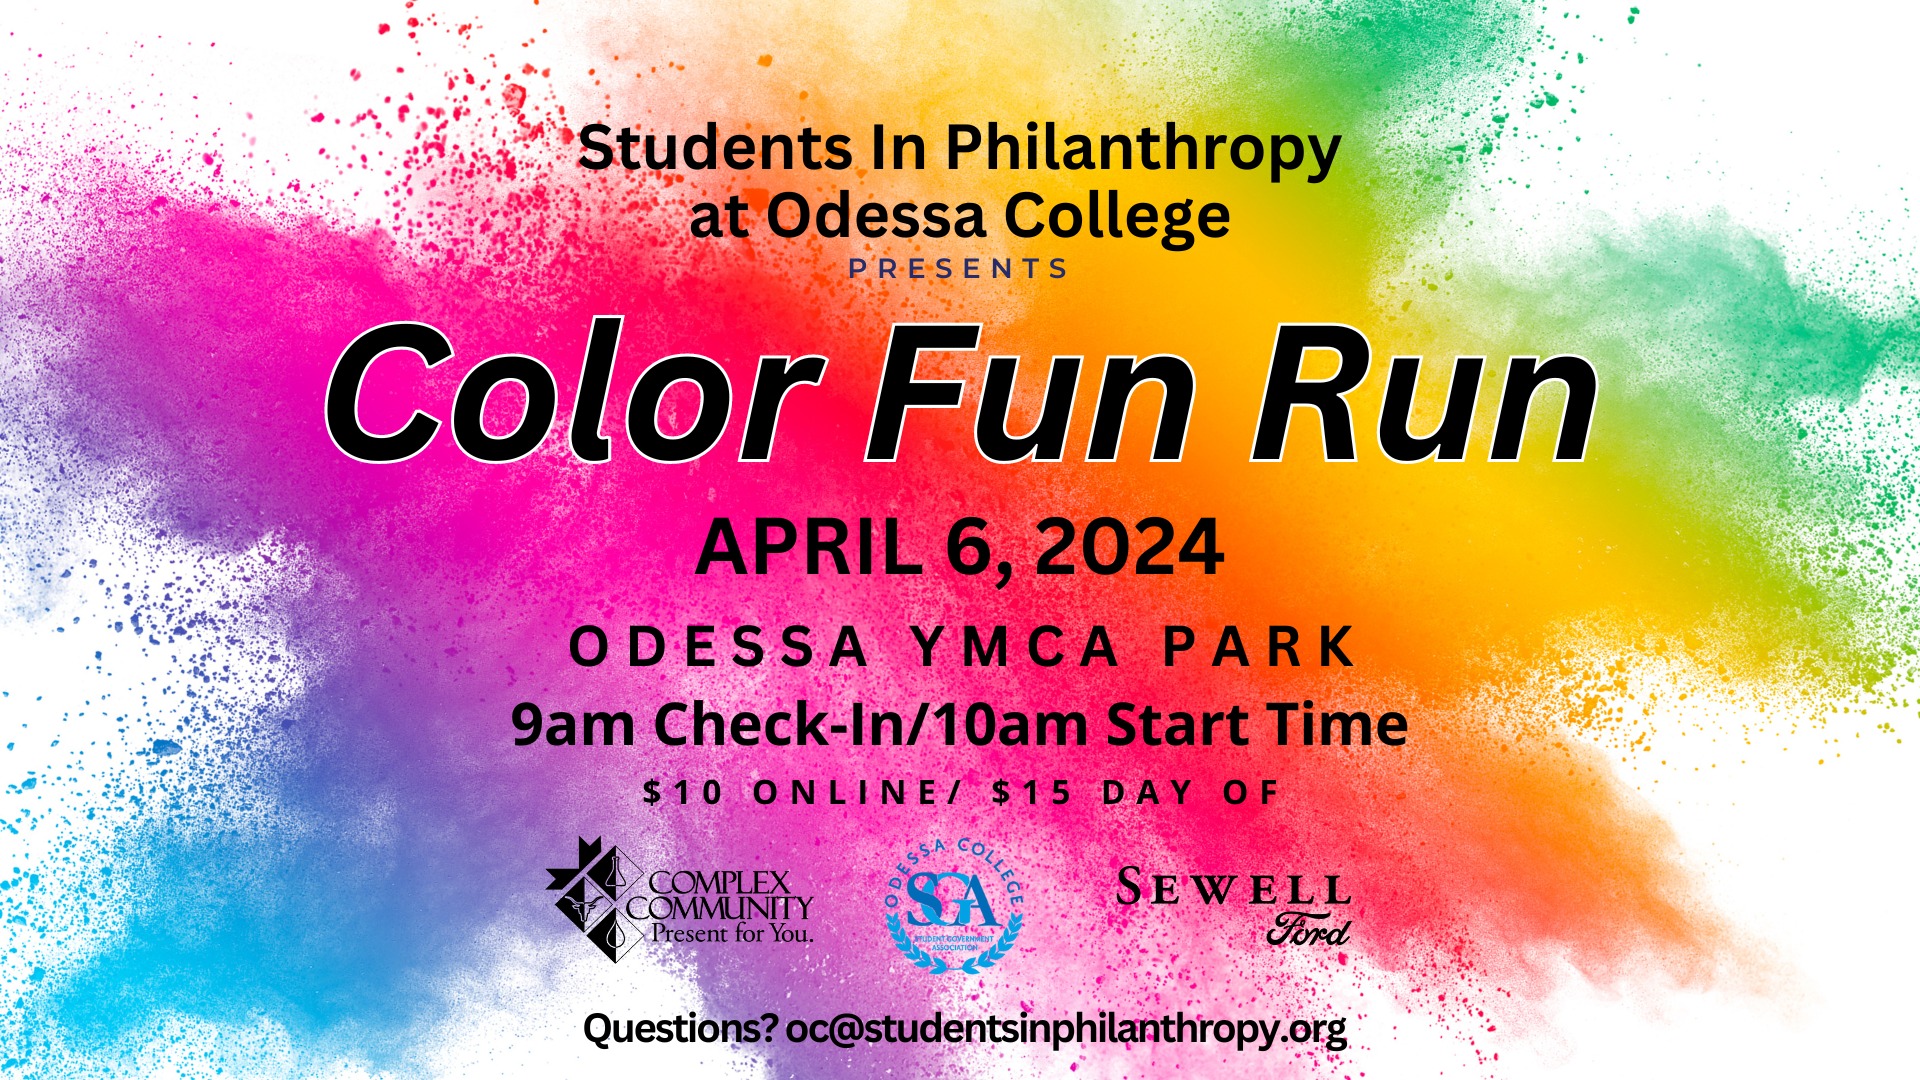 Color Fun Run at Odessa YMCA